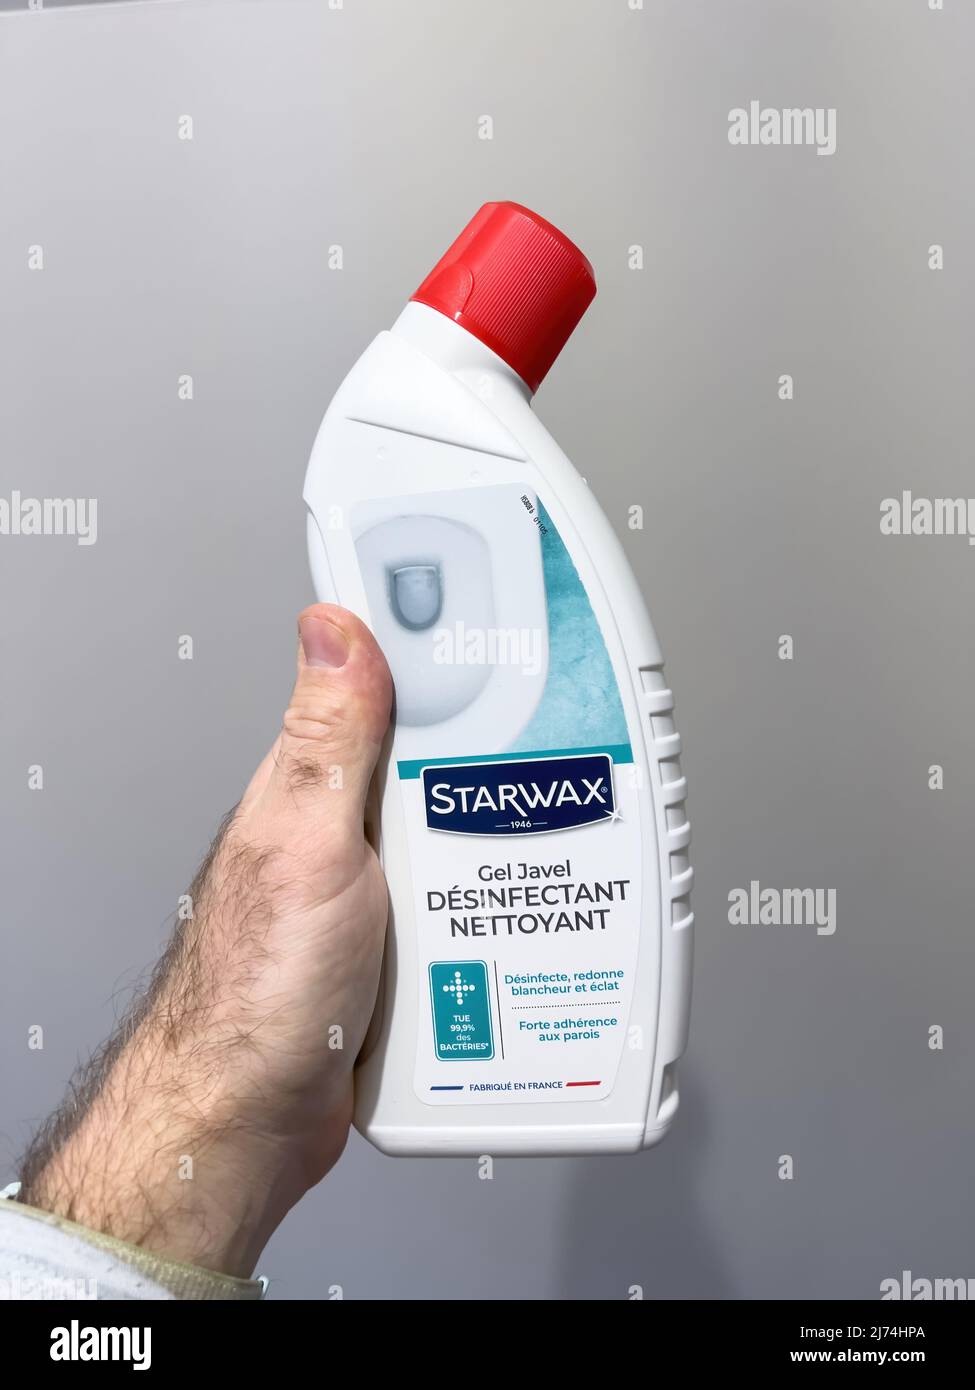 Parigi, Francia - Apr 8, 2022: Flacone di plastica POV maschio con detergente per gel disinfettante Starwax gel Javel nettoyant wc Foto Stock